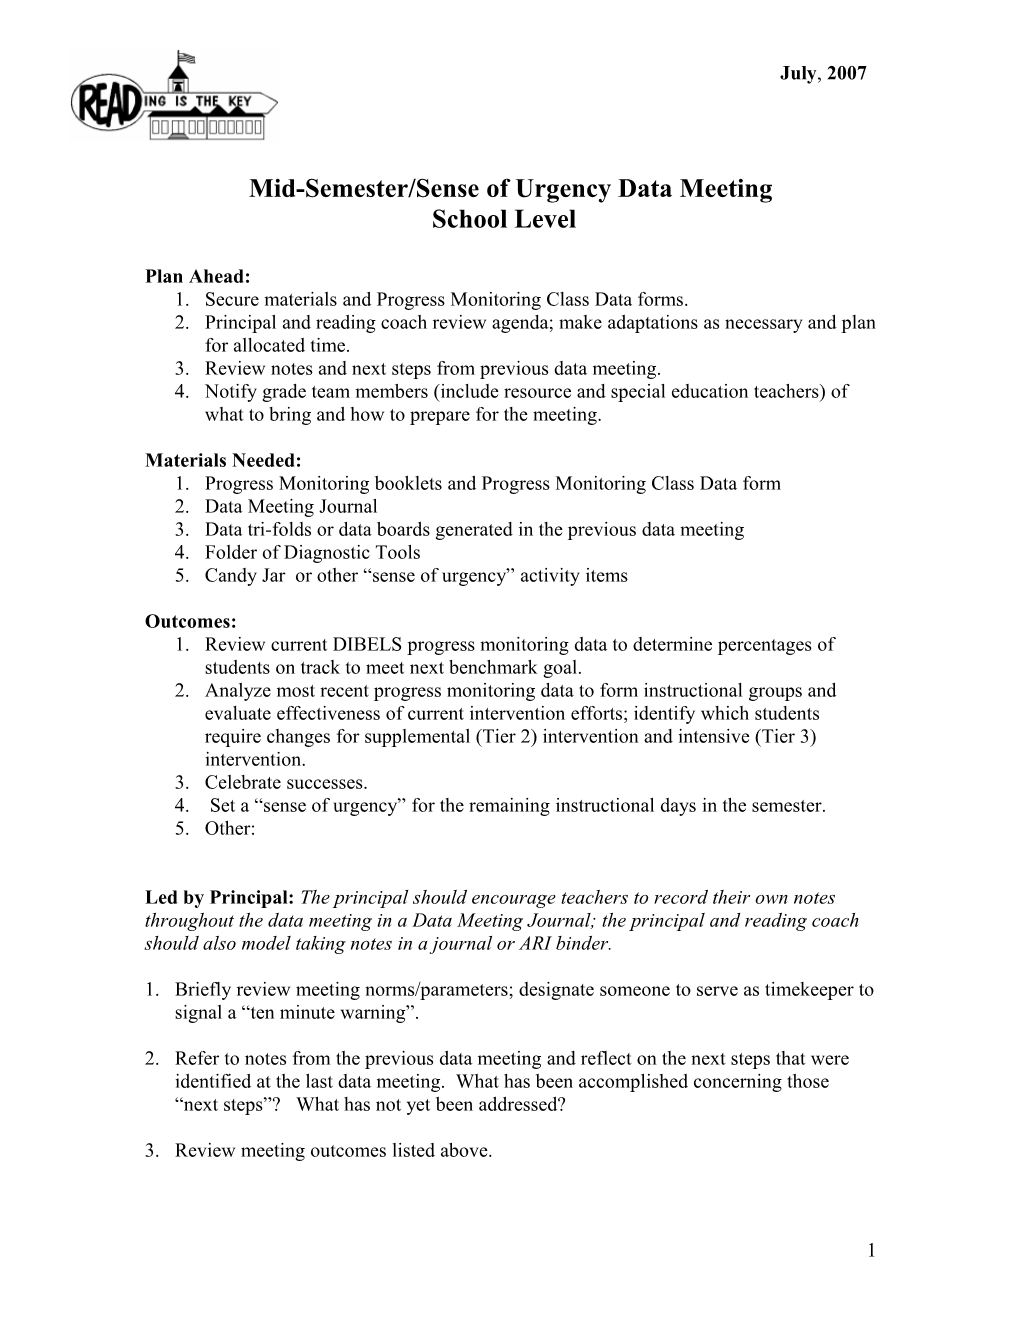 Mid-Semester Data Meeting (Agenda 3)